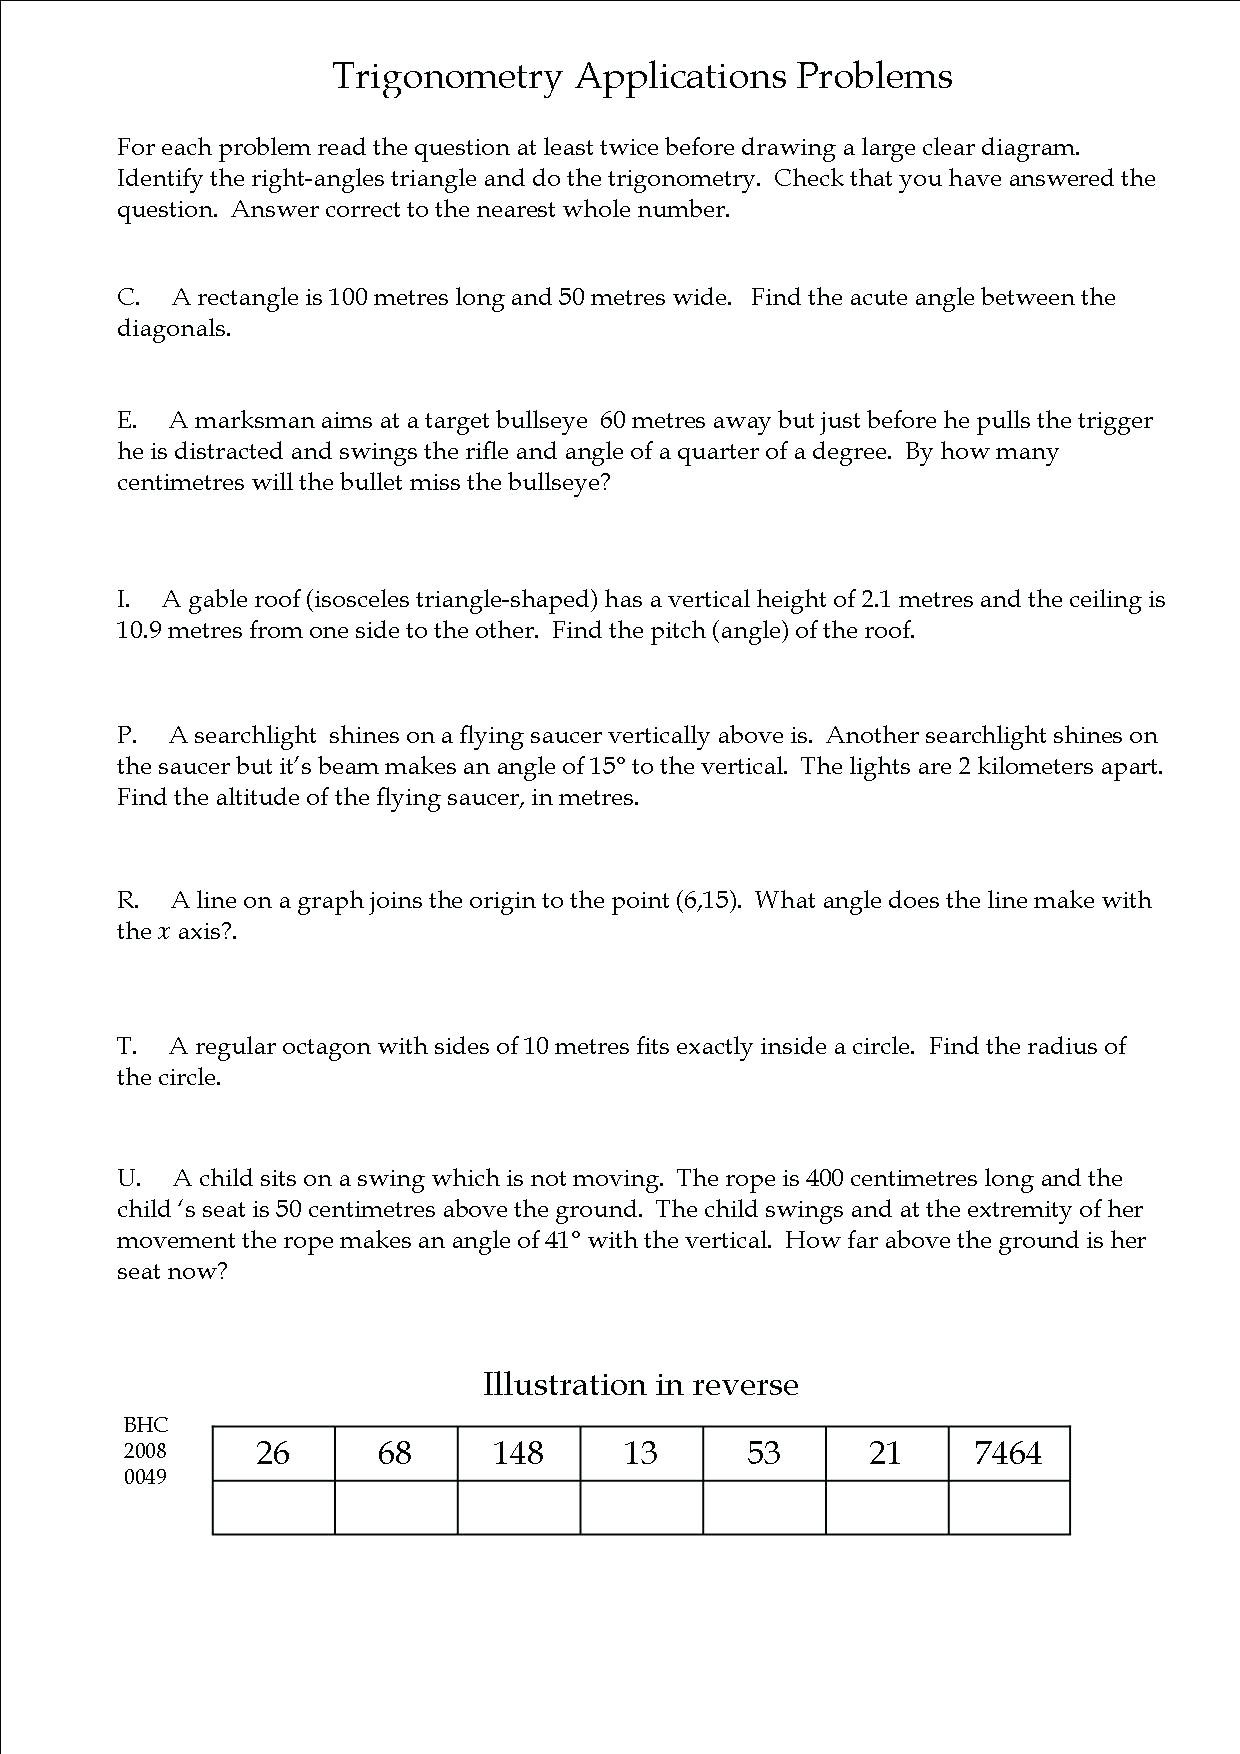 Trigonometry Word Problems Worksheet Answers Trigonometric Problems Worksheet Math Triangle Word Problems